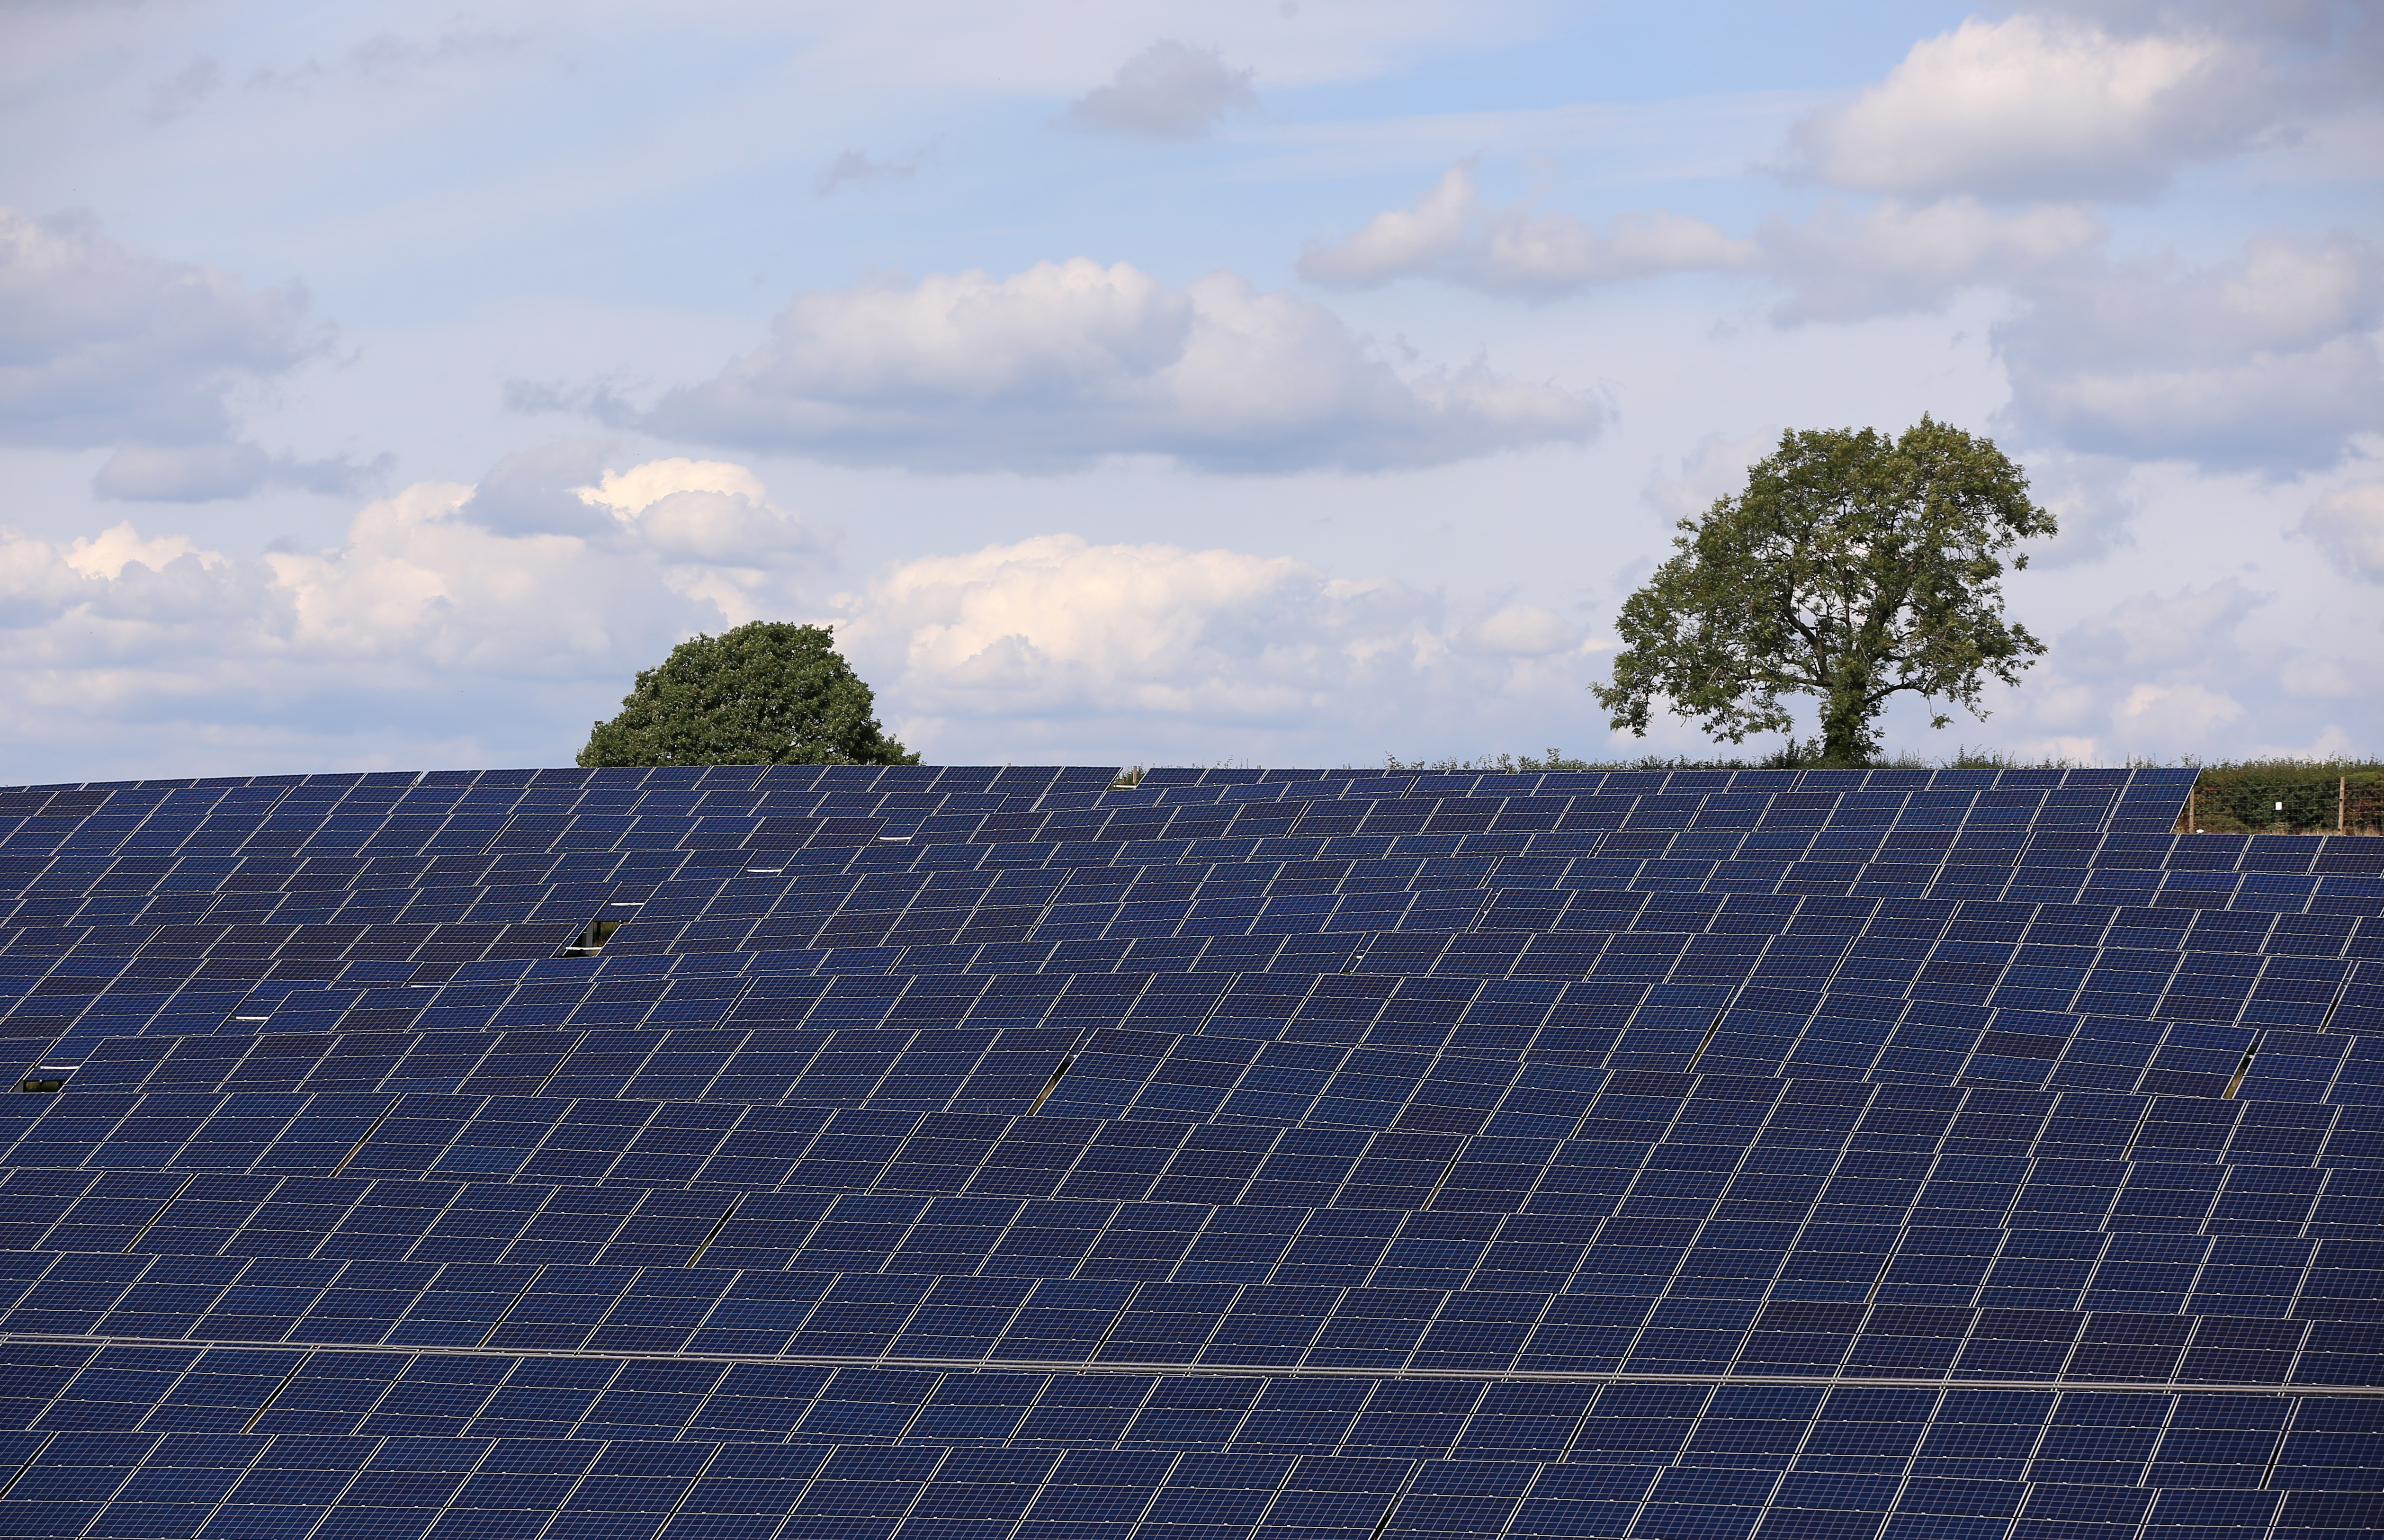 okehampton-today.co.uk - Andrew Dowdeswell - Torridge has one of the highest proportions of solar panels in the UK